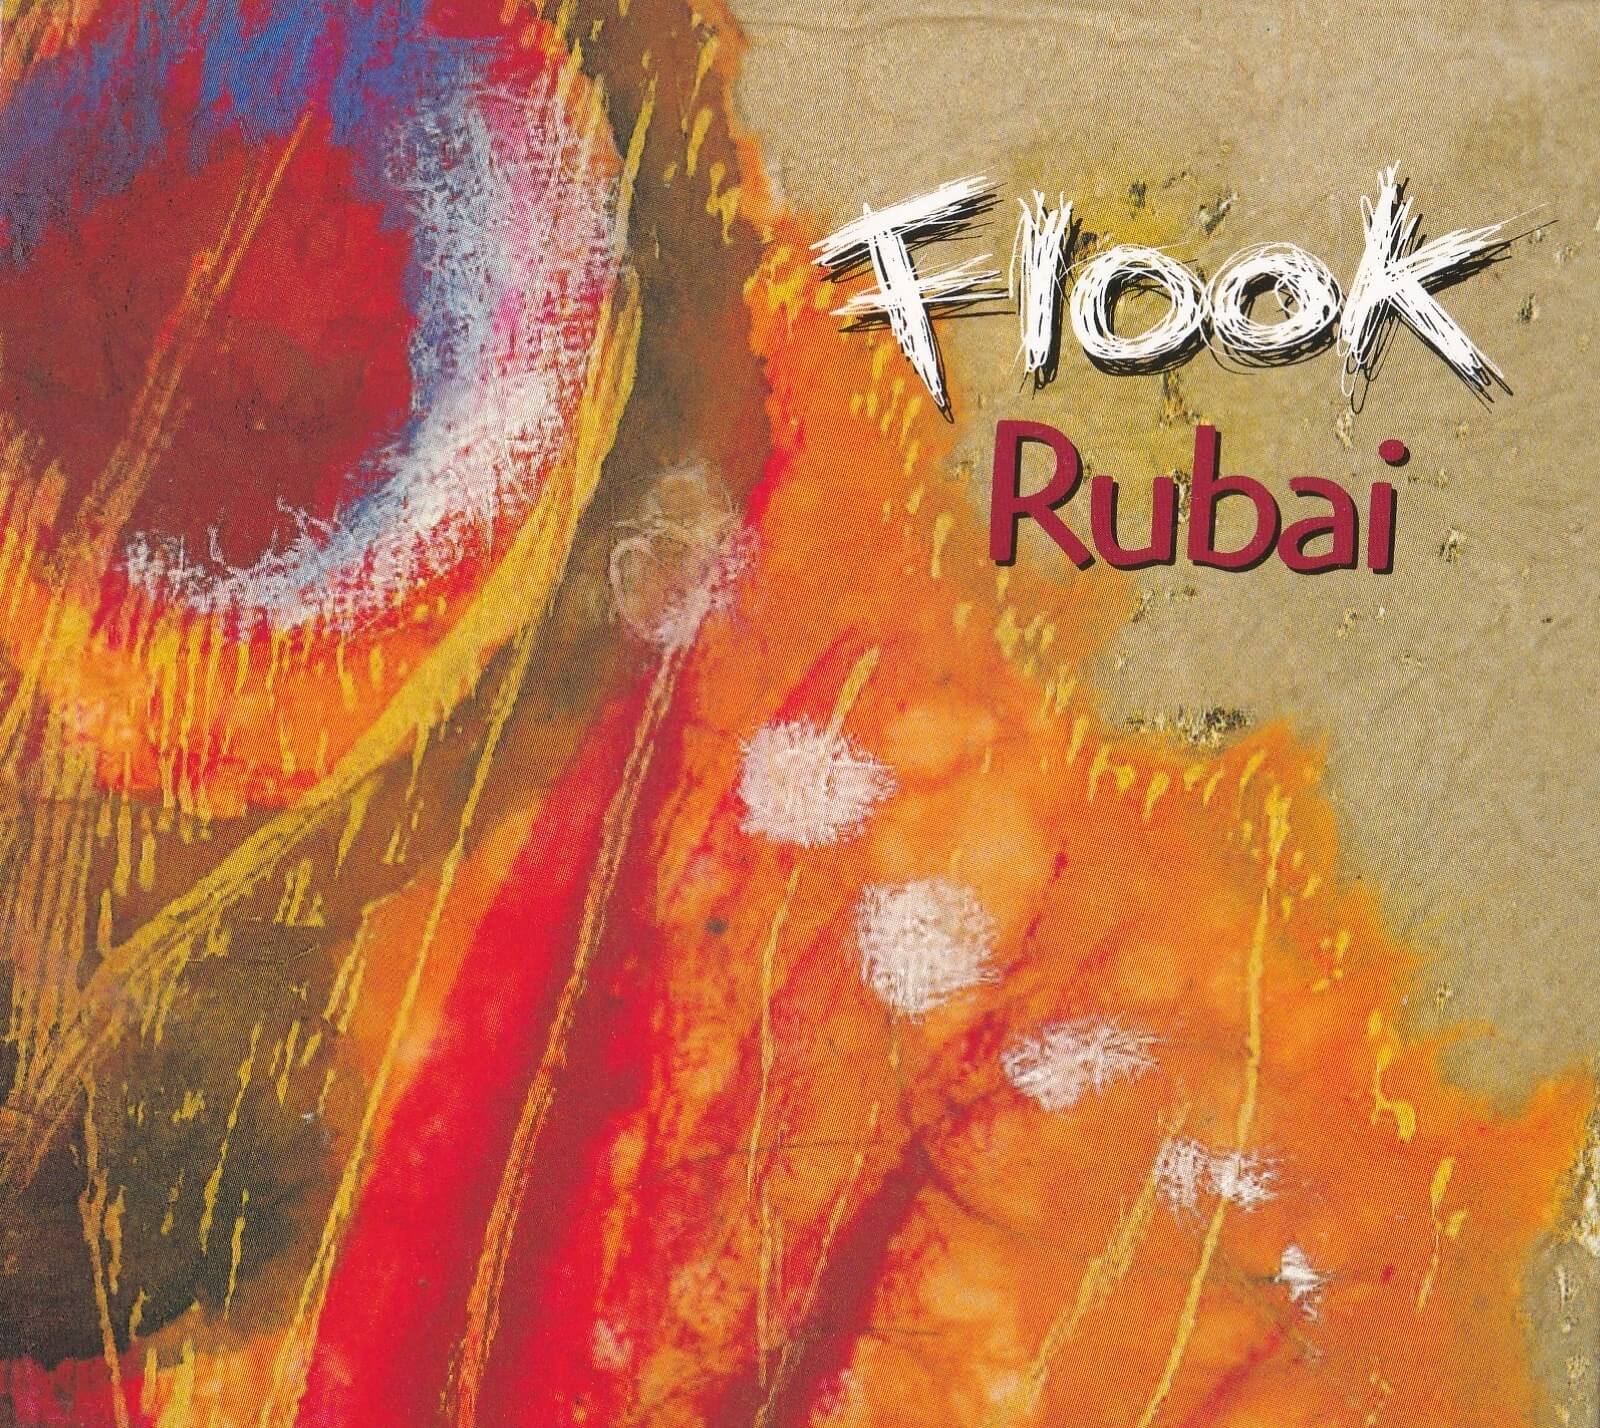 FlookのセカンドアルバムRubai